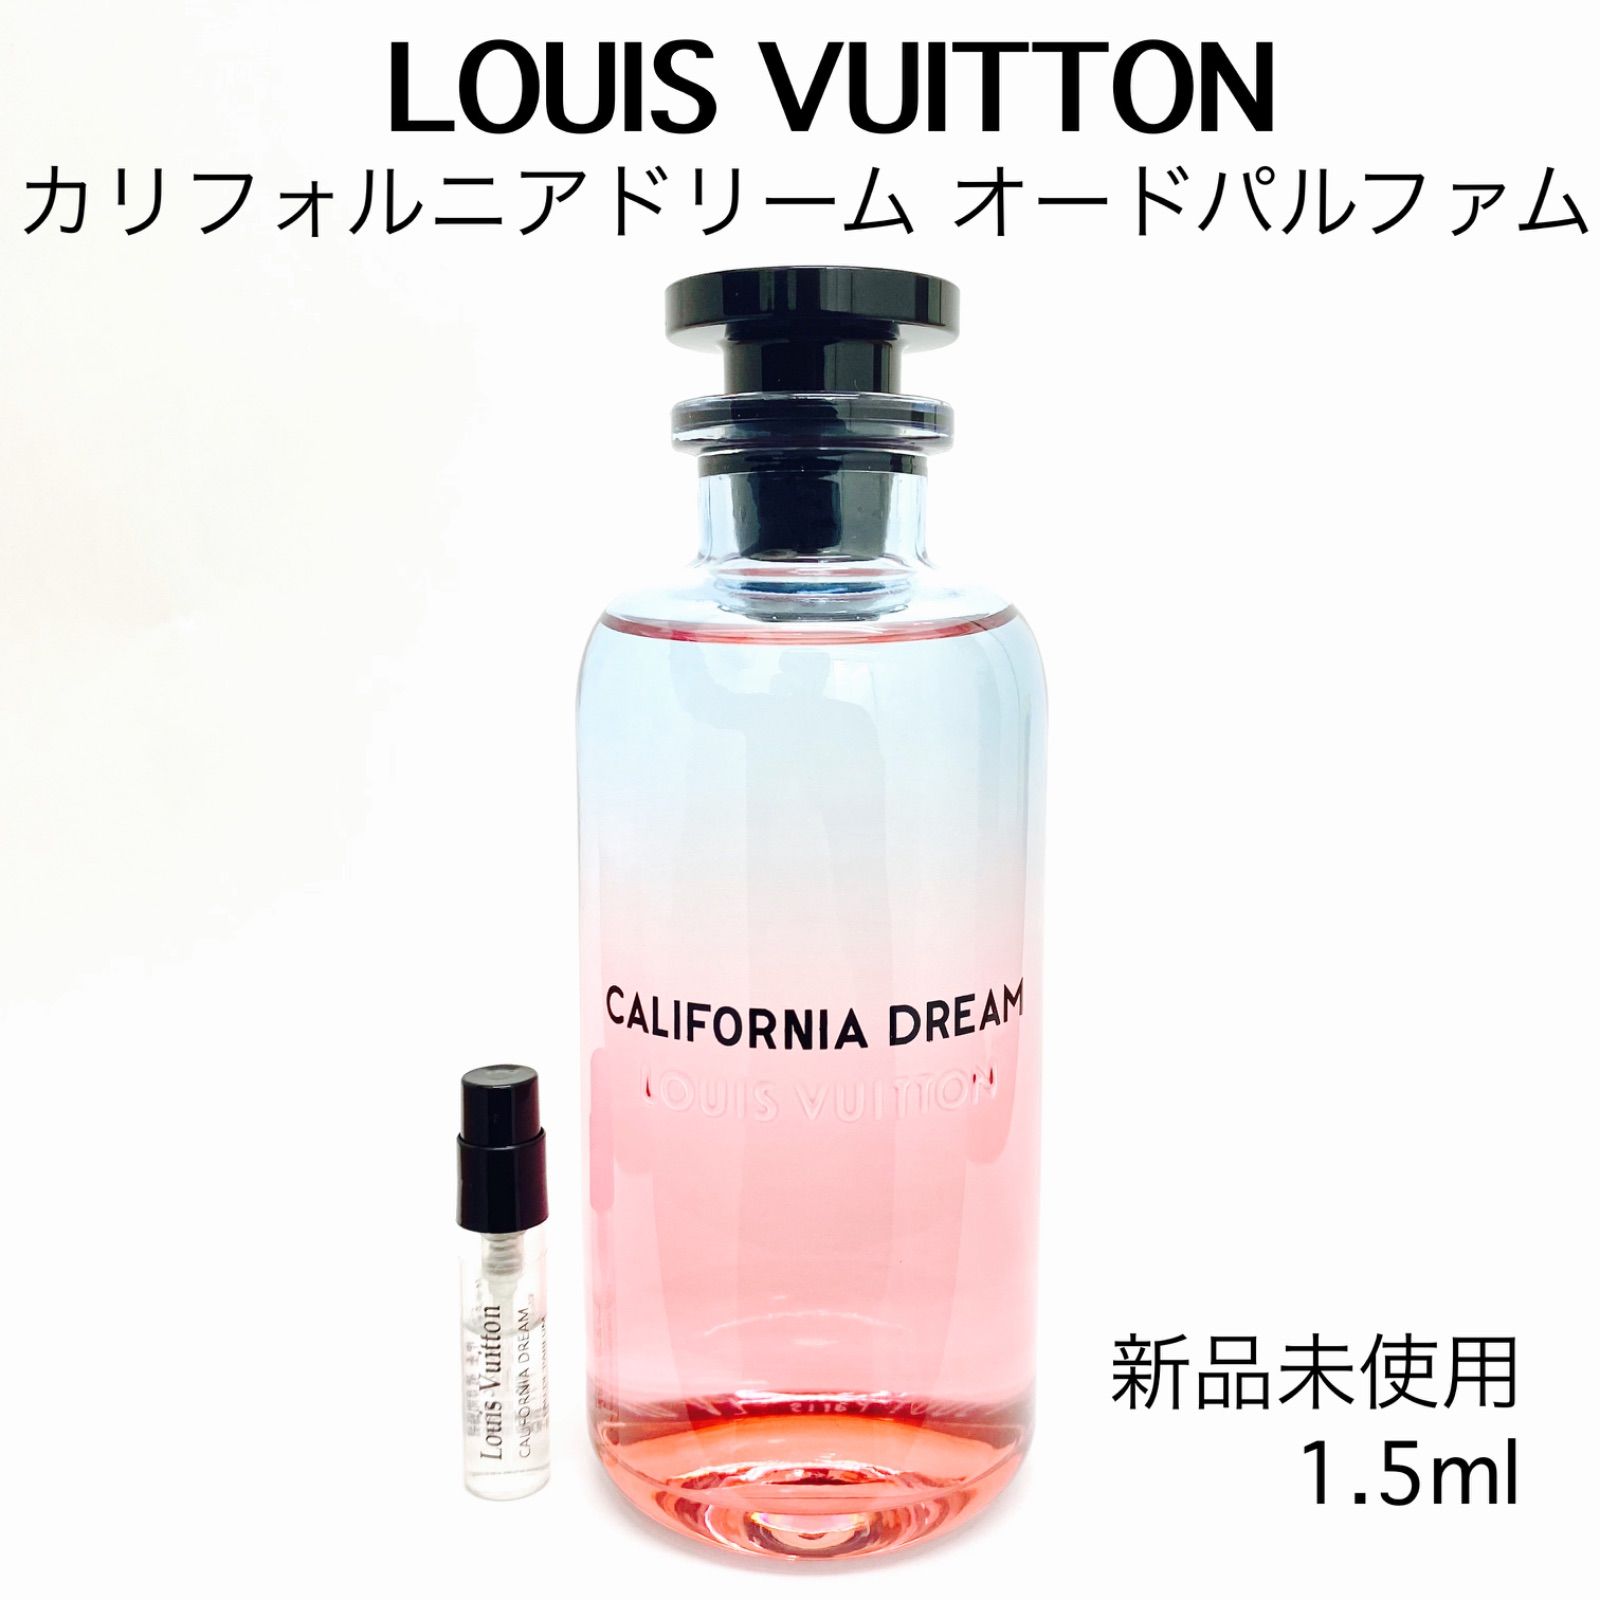 LOUISVUITTON ルイヴィトン カリフォルニアドリーム 香水 1.5ml - メルカリShops